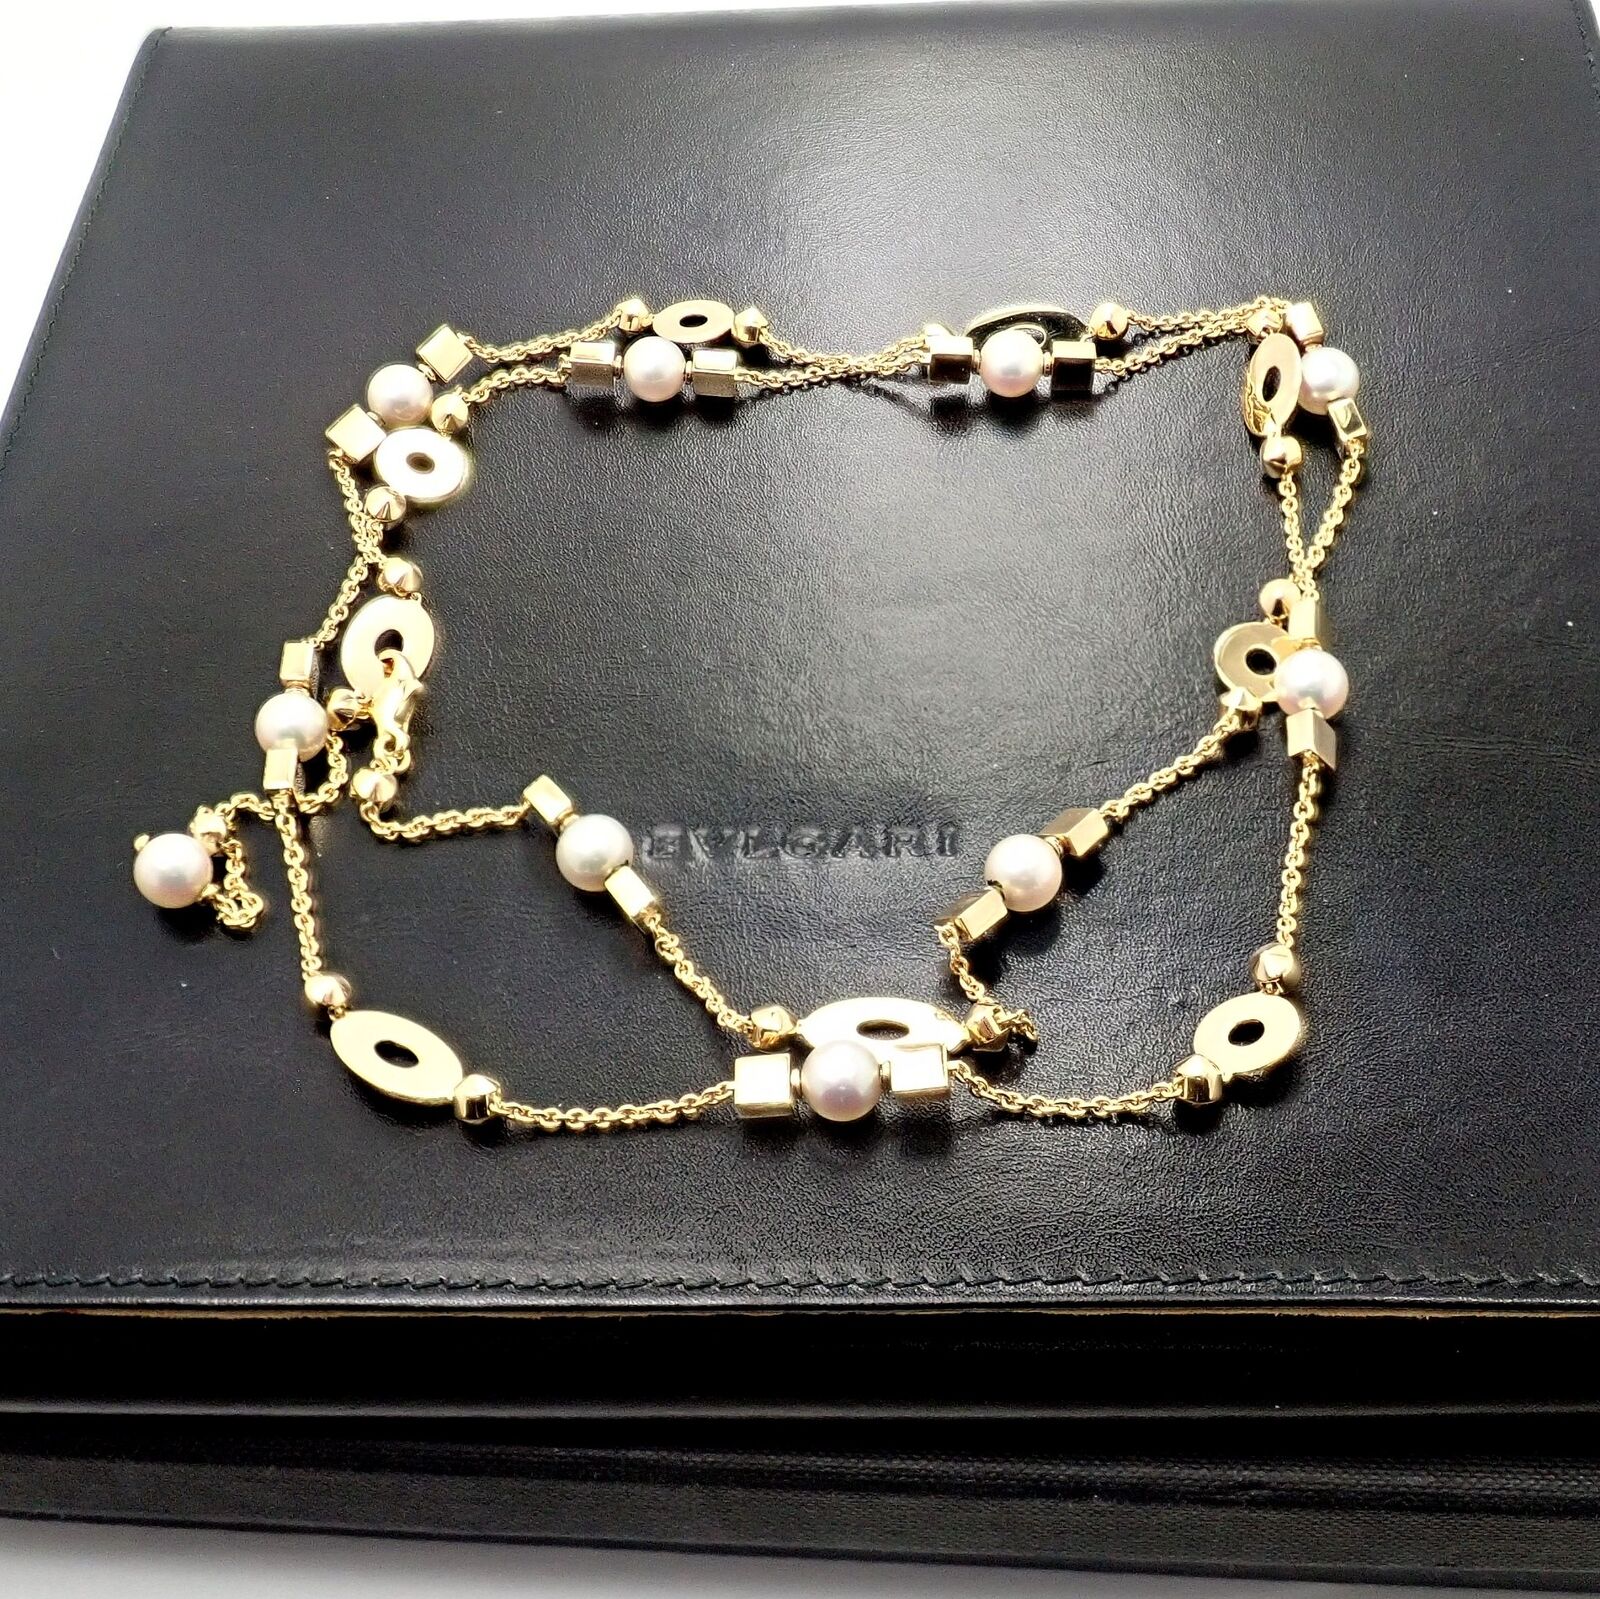 caged pearl necklace – Hernan Herdez